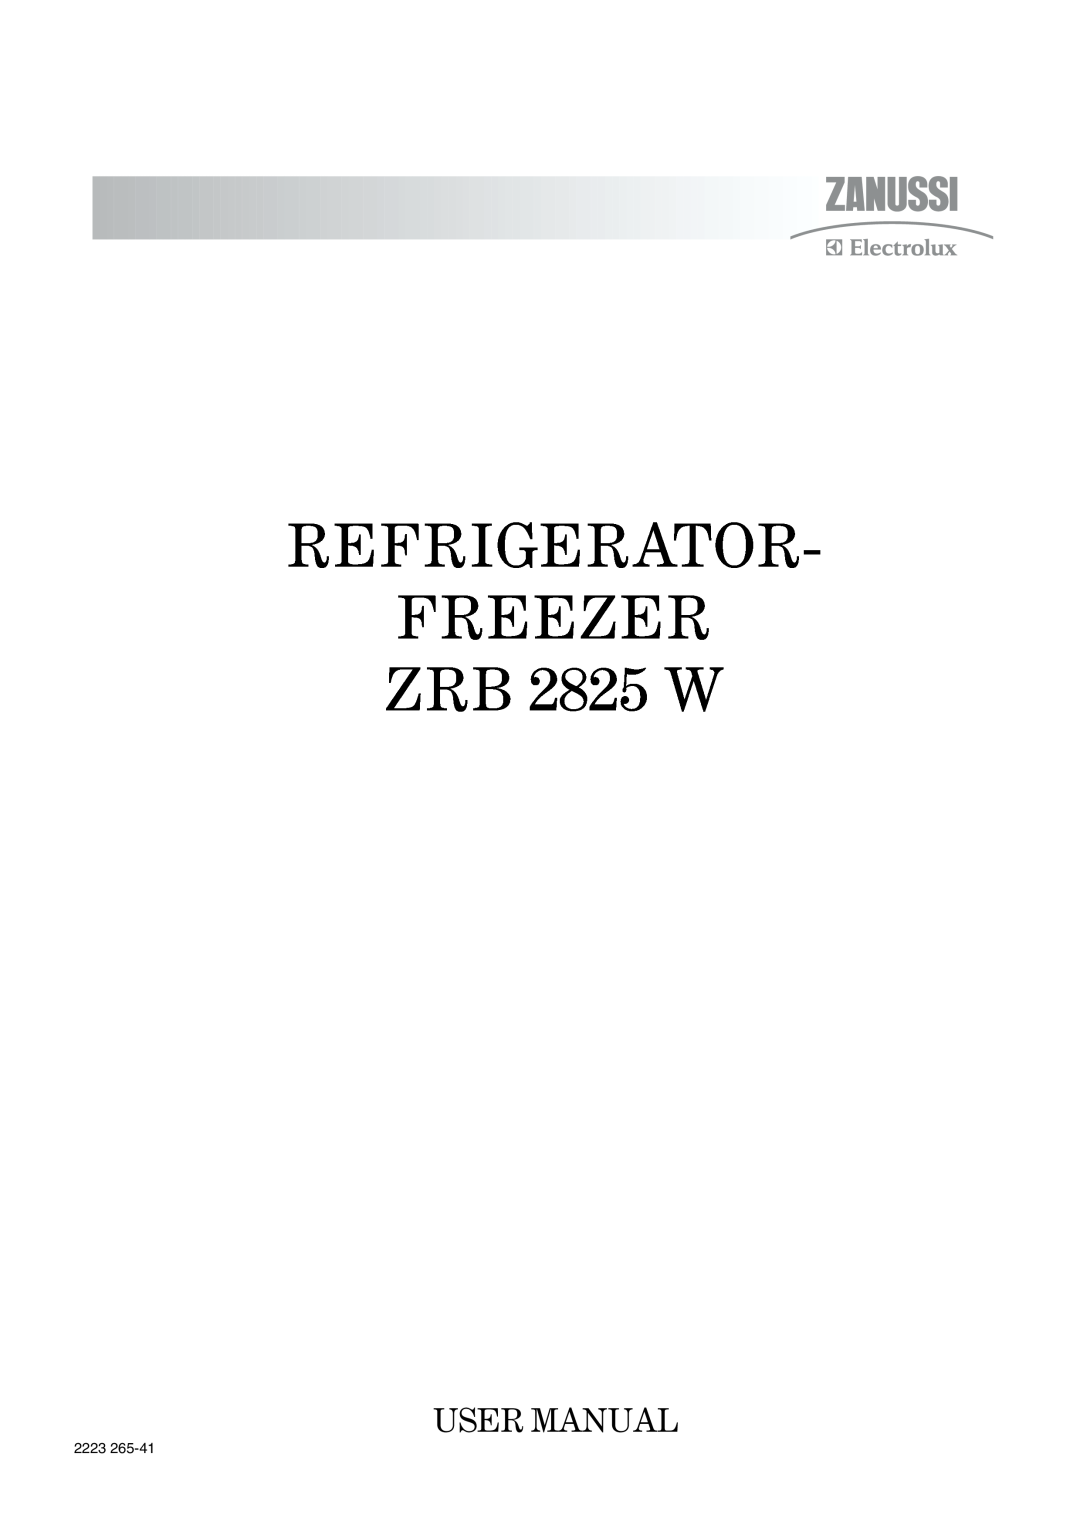 Zanussi user manual REFRIGERATOR FREEZER ZRB 2825 W, User Manual, 2223 